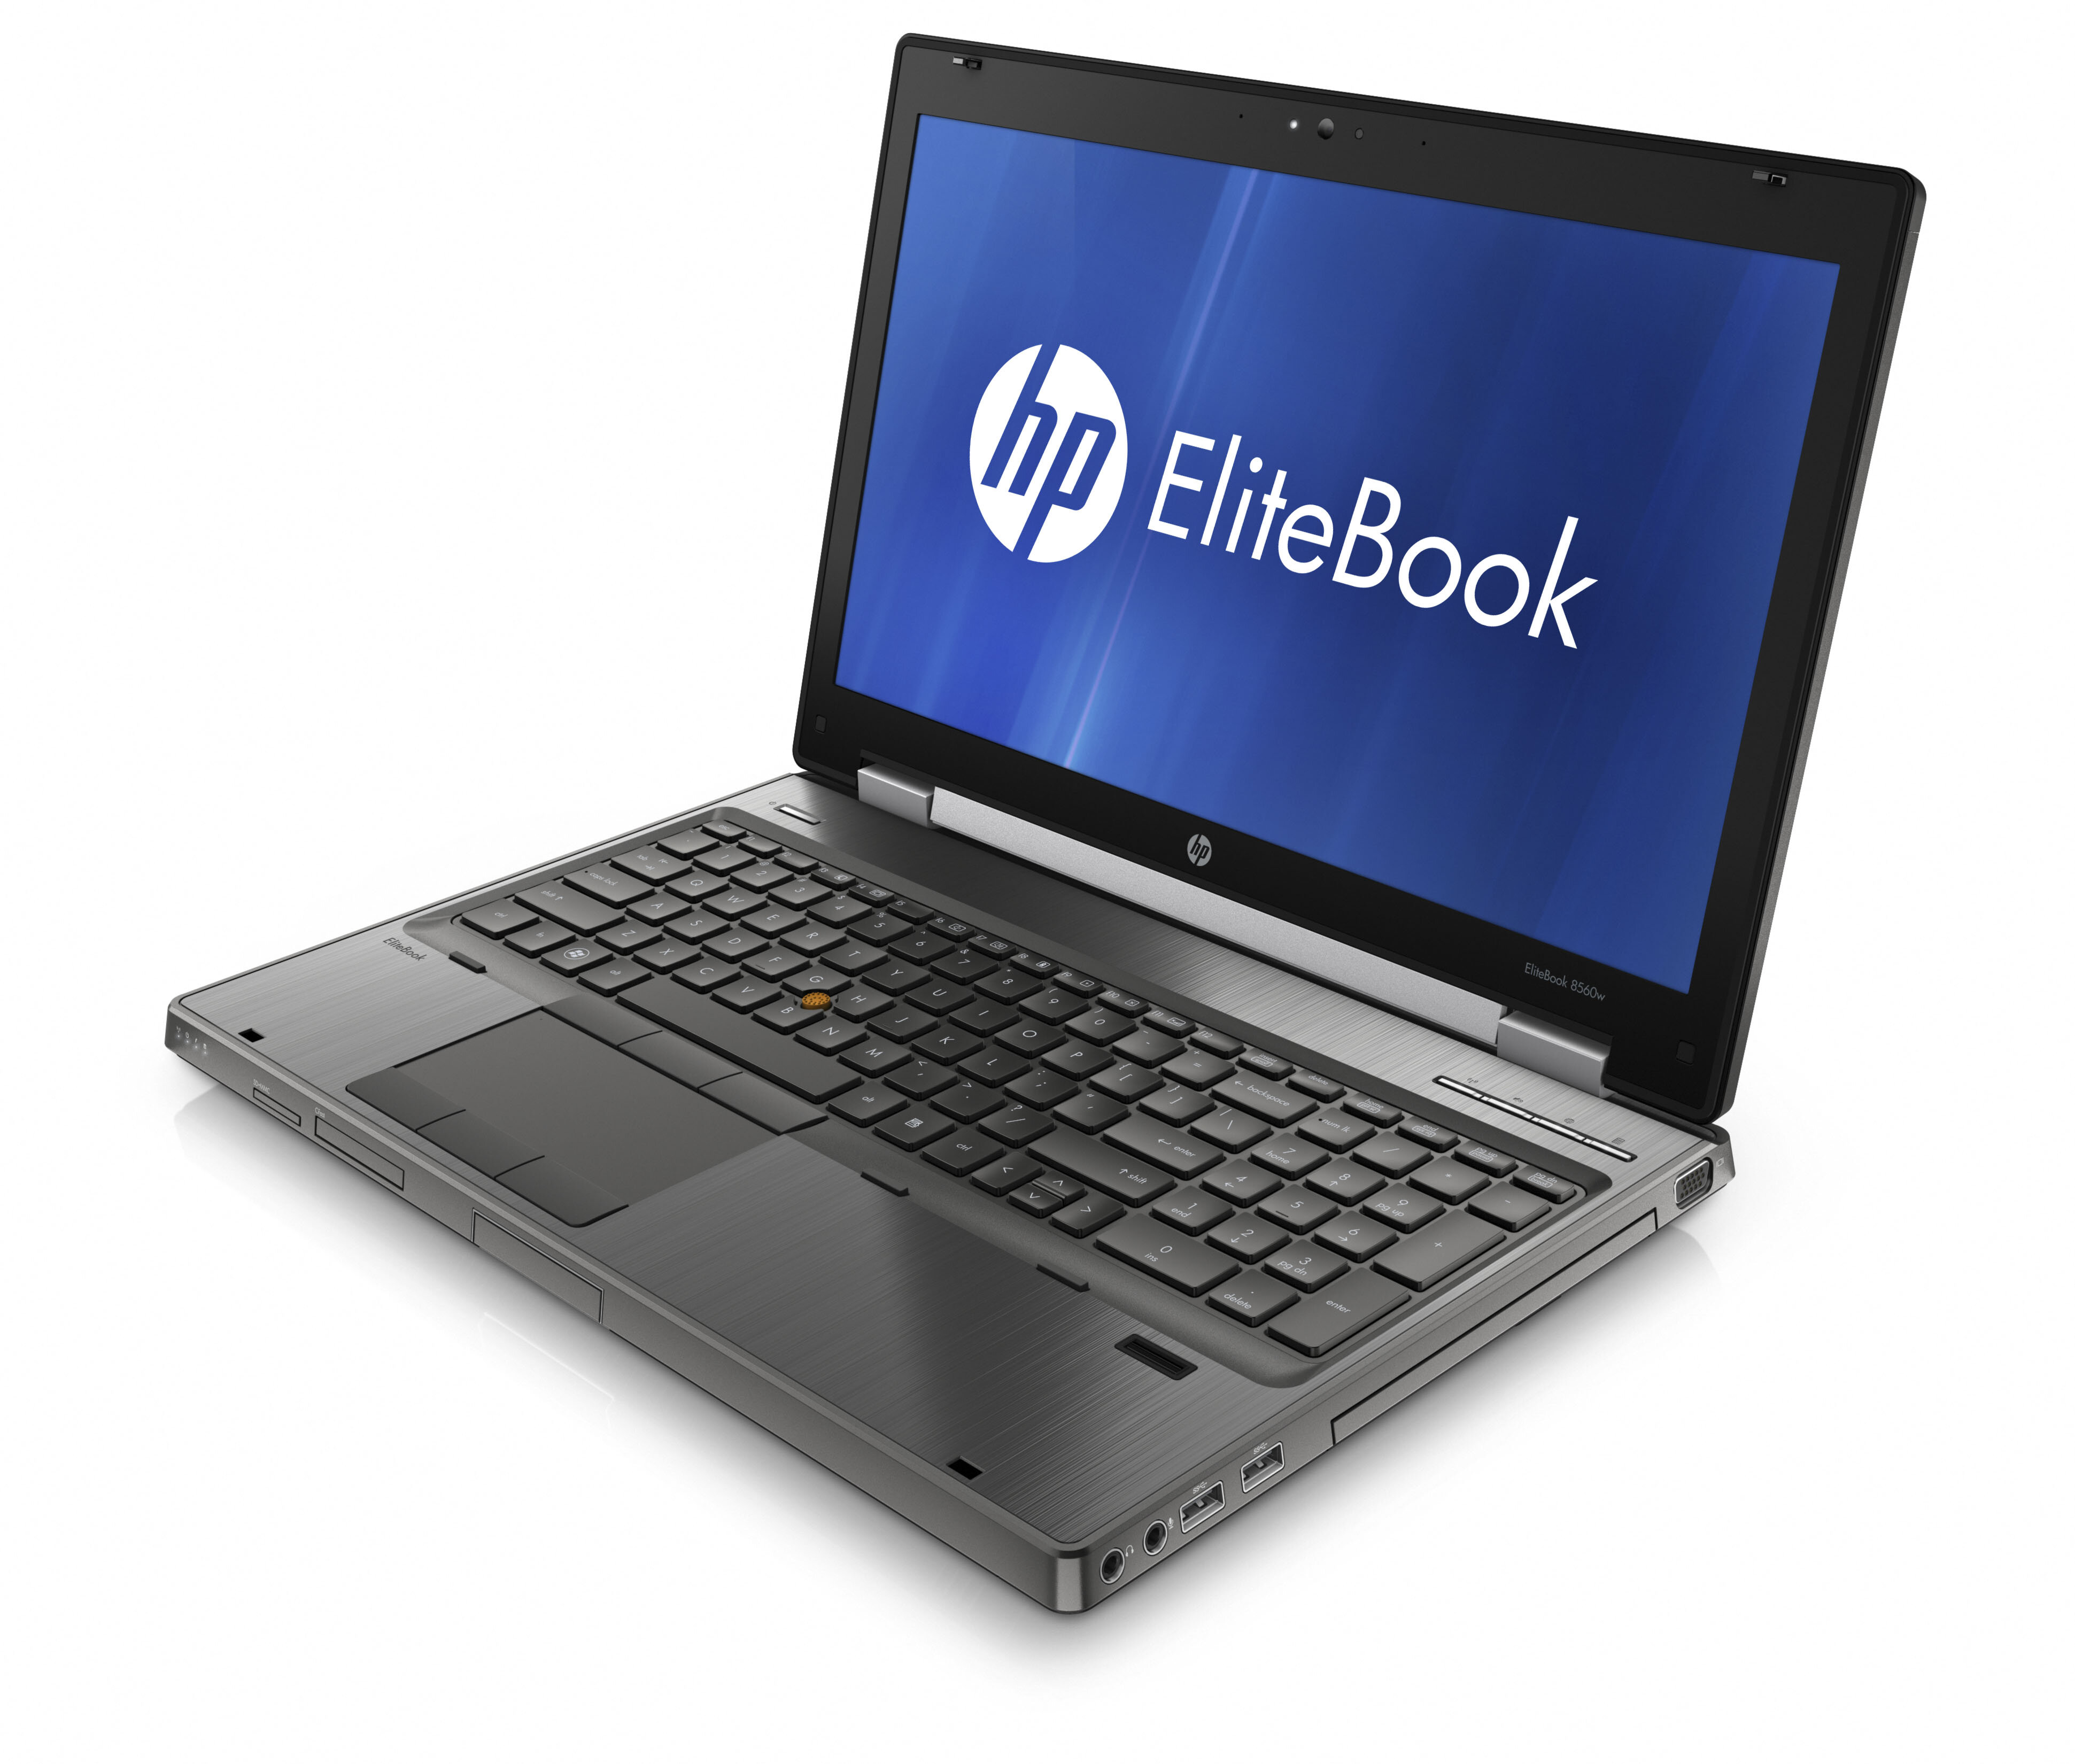 Laptop Elitebook HP 8560W hiệu suất mạnh mẽ